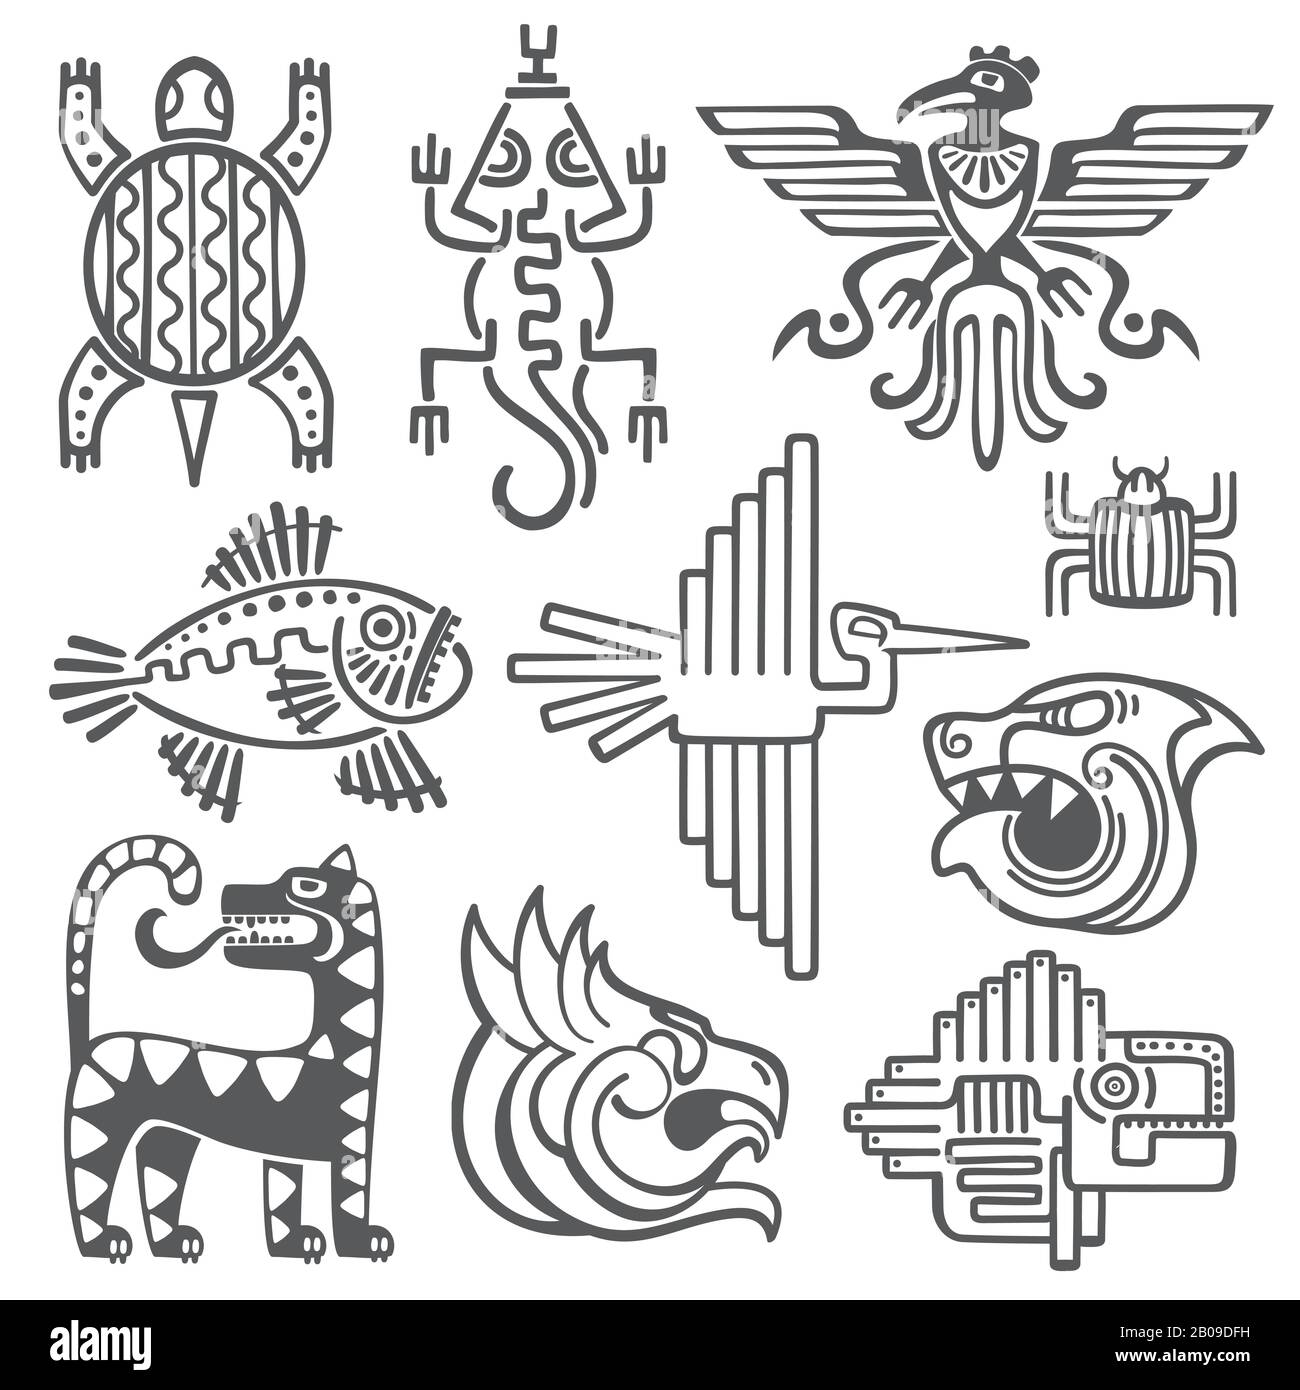 Mexican Aztec Symbols Vintage Tribal Vector Stock Vector (Royalty Free)  704251312 | Shutterstock